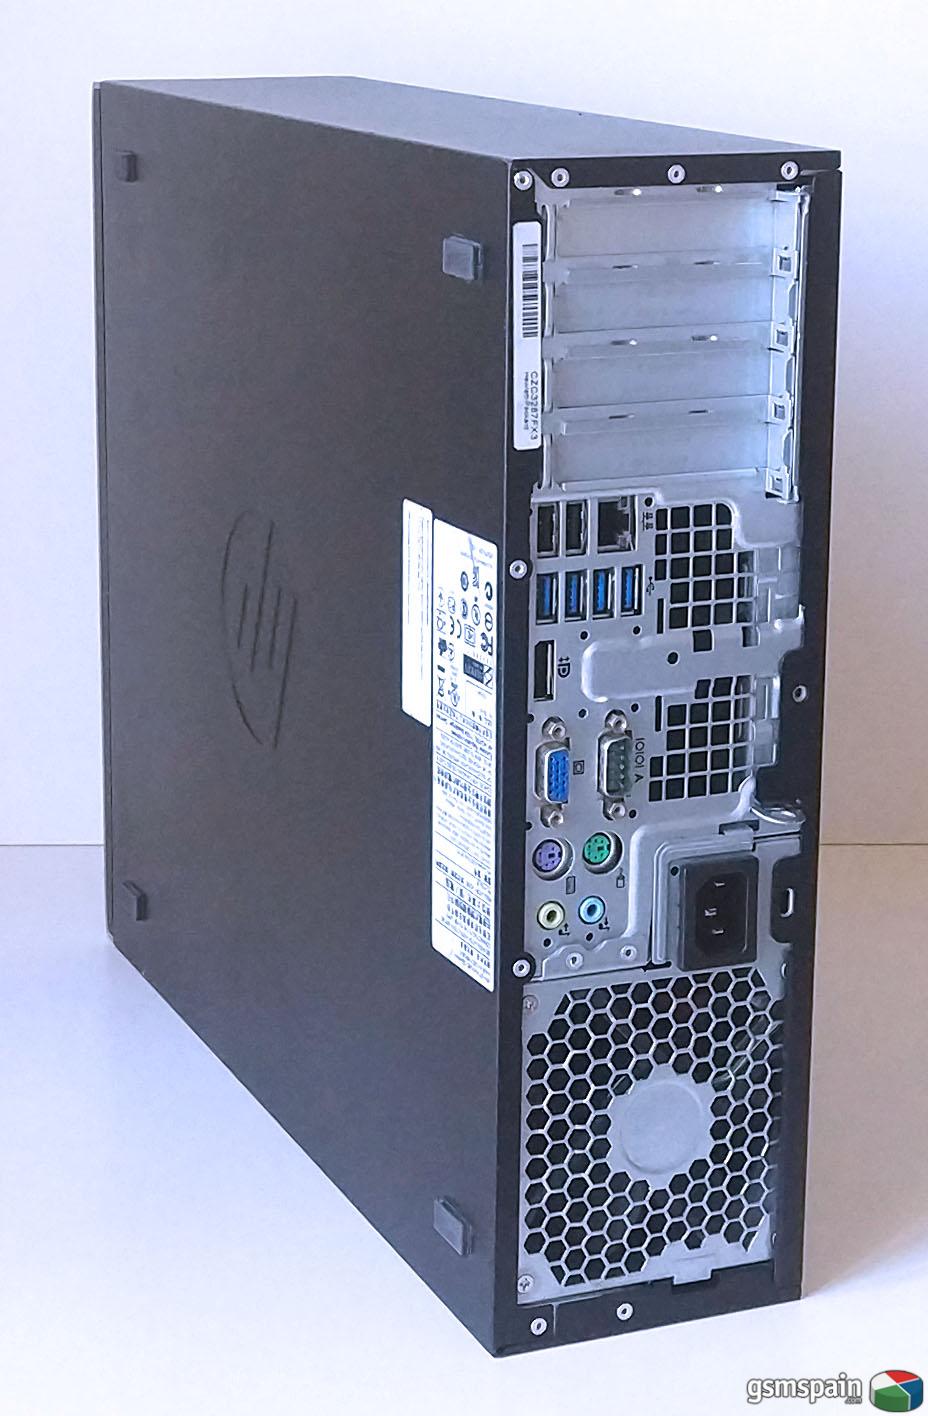 [VENDO] Ordenador (cpu) HP Compaq 8300 Elite Sff, i5